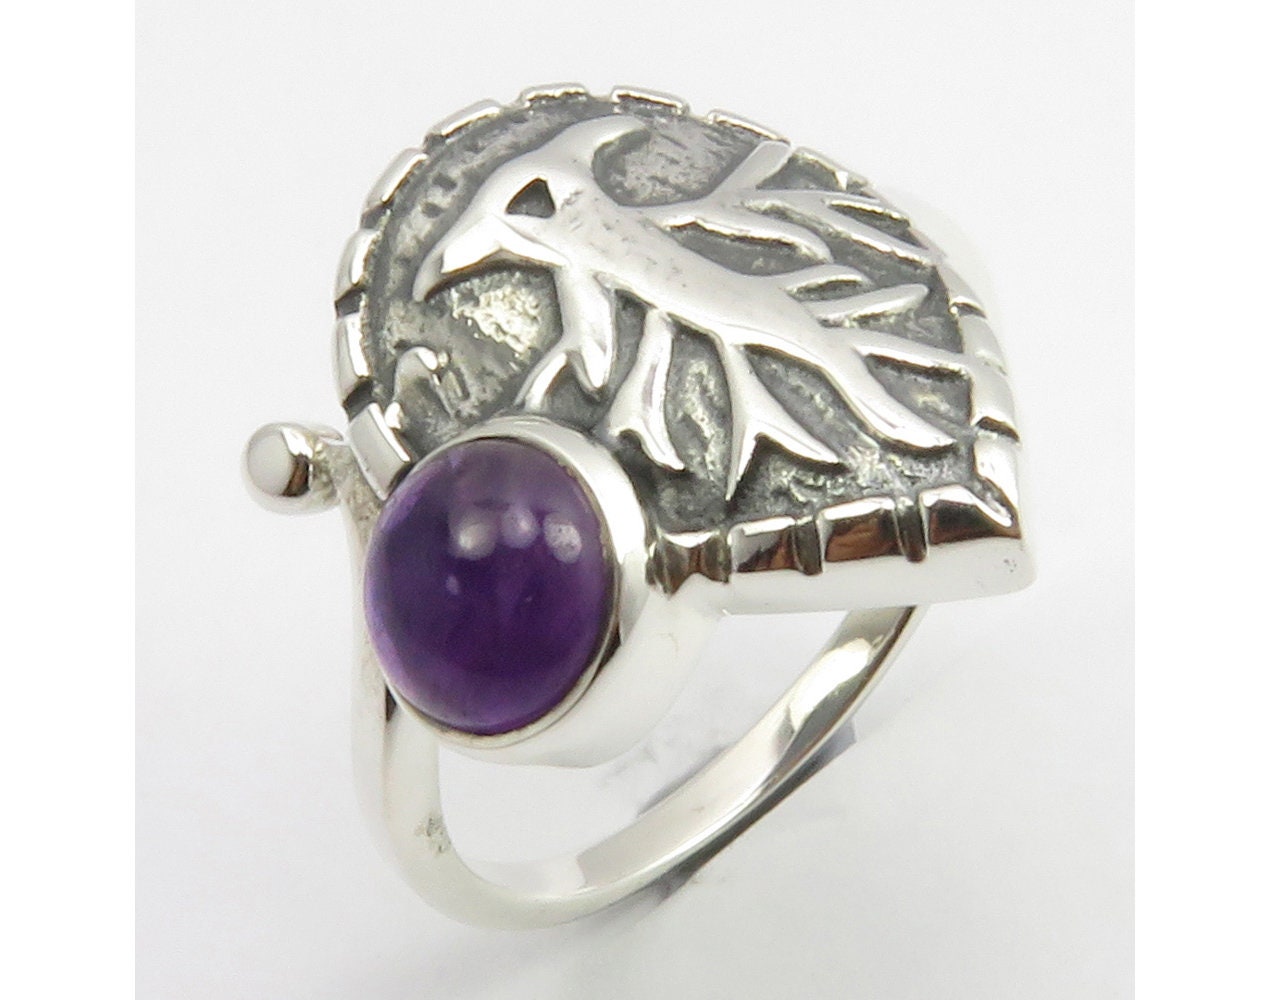 CZgem Genuine Amethyst Ring 925 Sterling Silver Ring Gemstone Women's Jewelry Band Ring Size 7.75